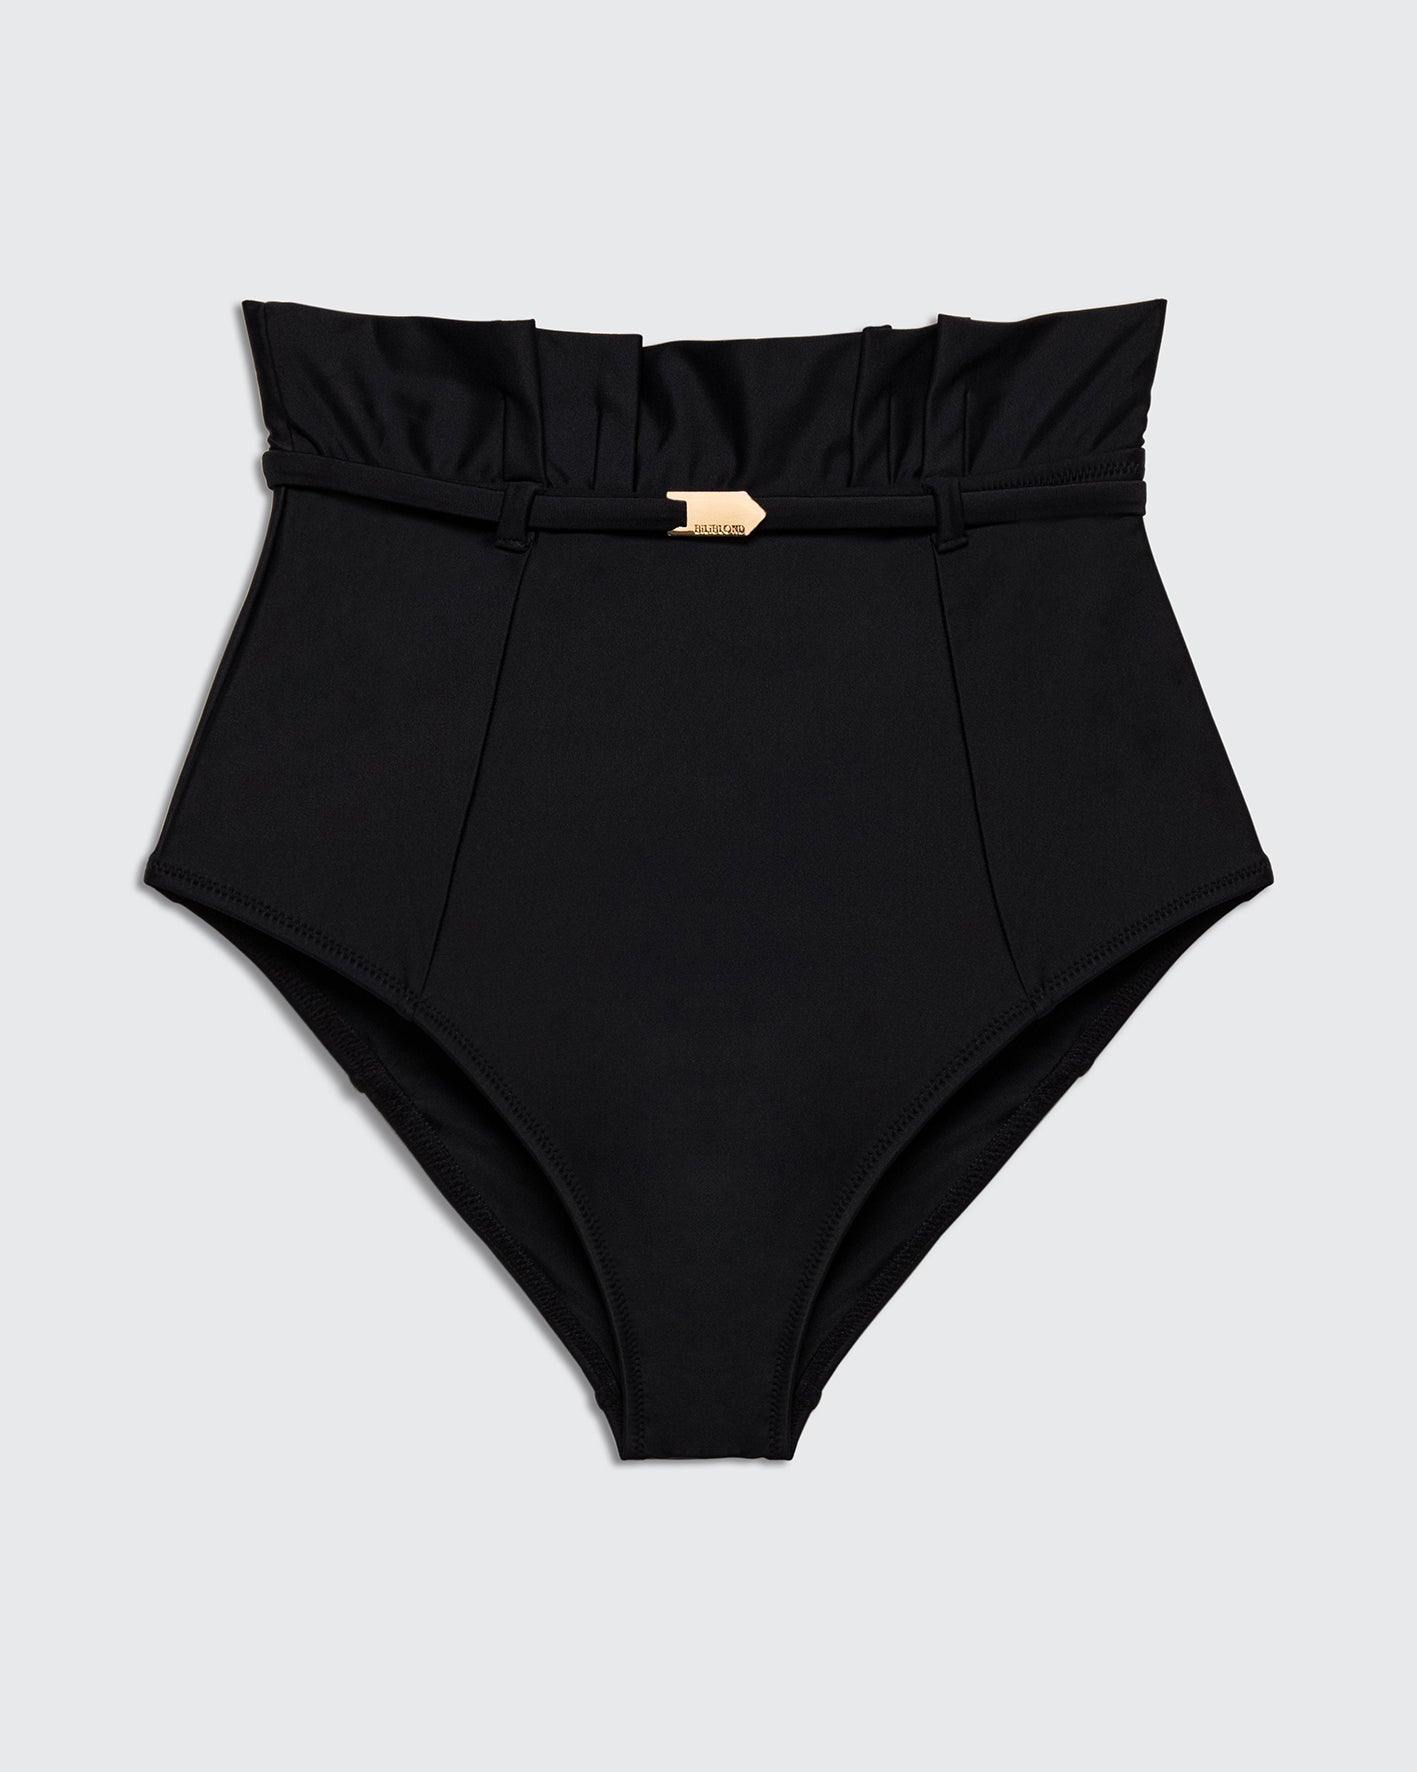 Bond Bottom Black Gold - BIKINI -BiliBlond Swimwear